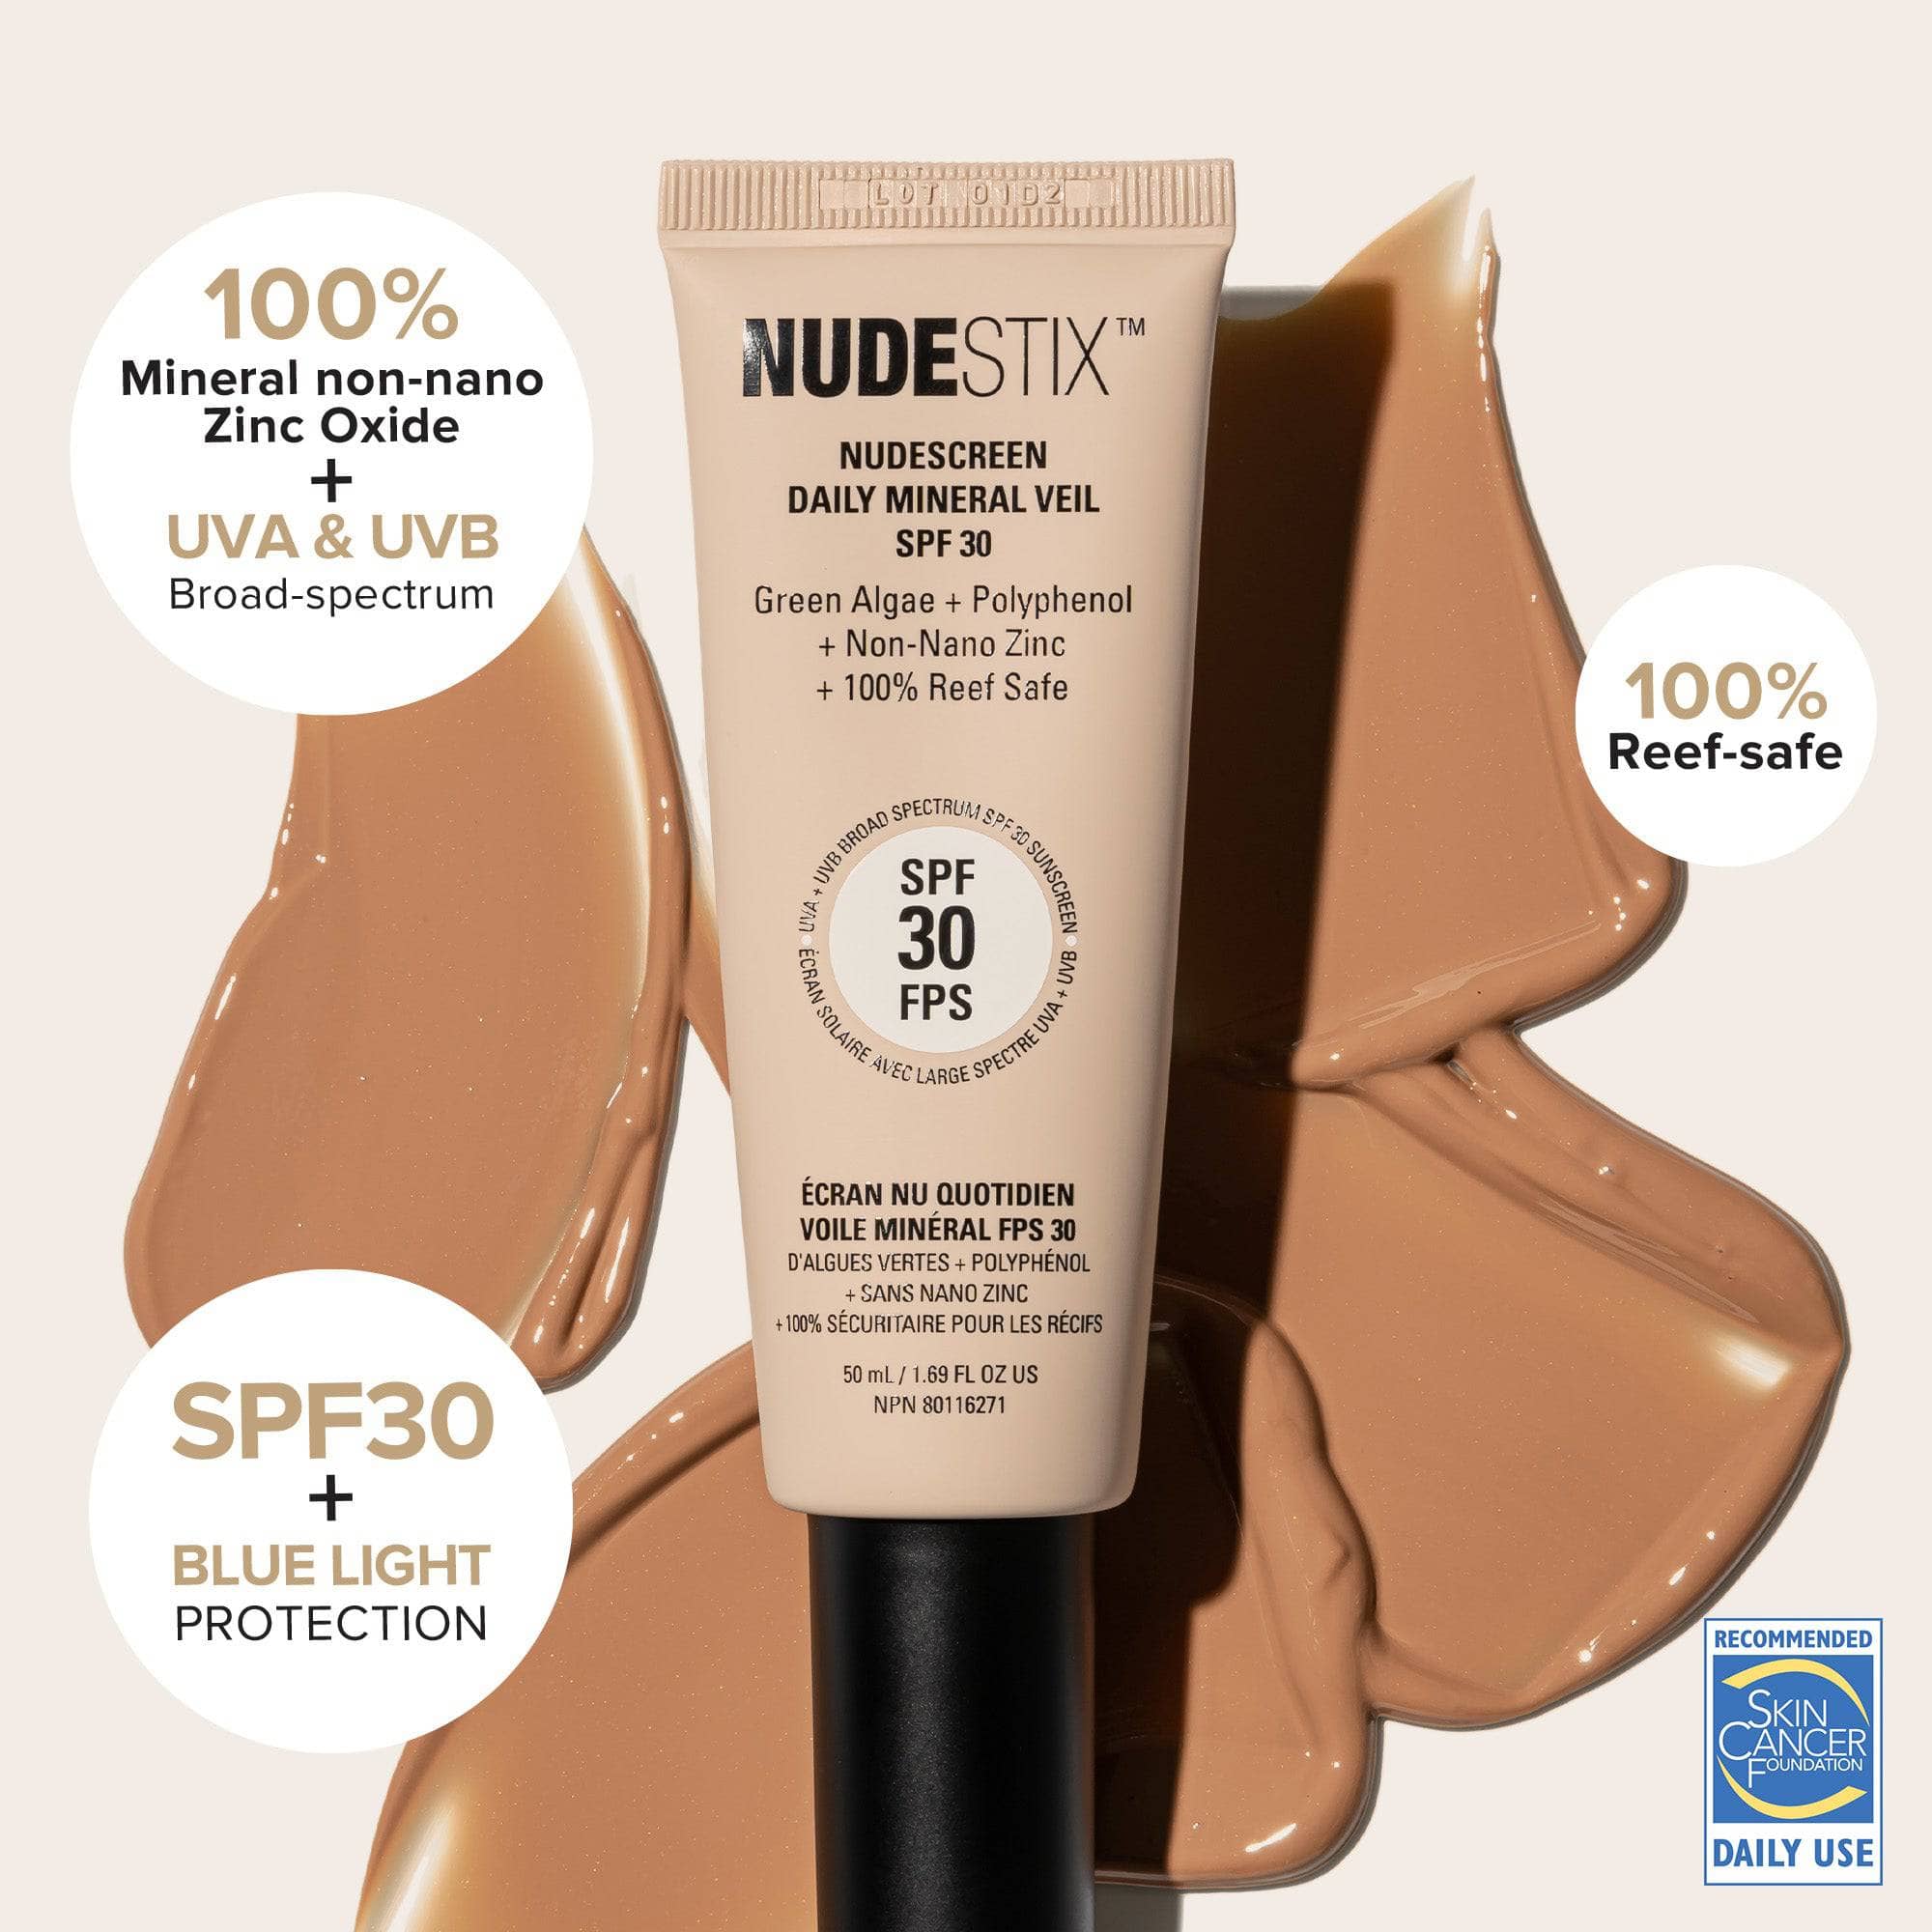 Nudescreen Tan with ingredients descriptions